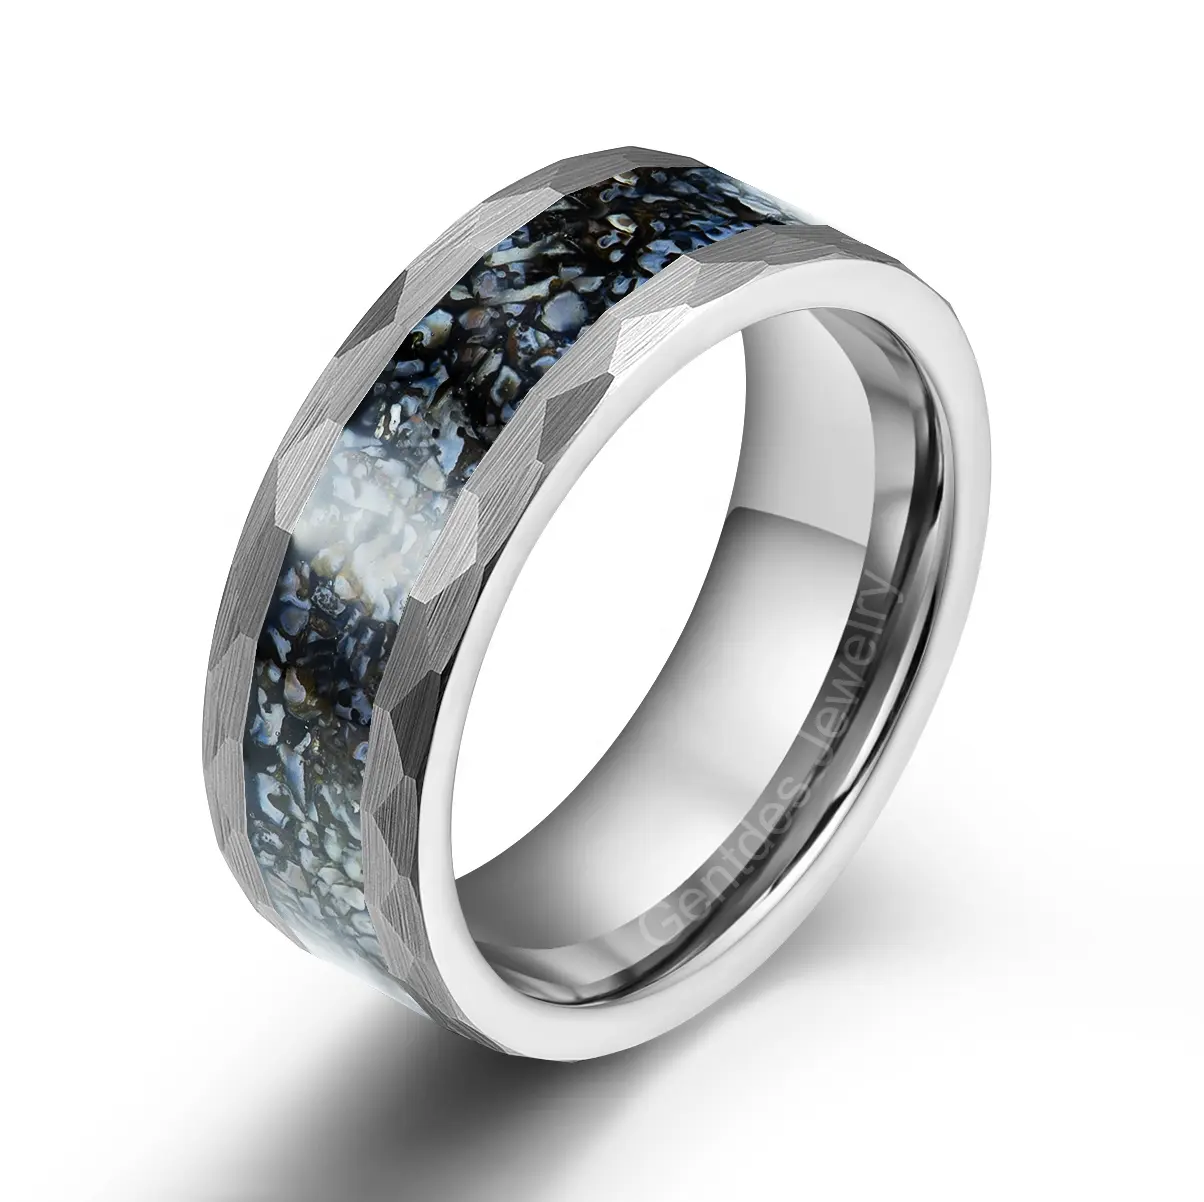 Gentdes Jewelry 8mm Tungsten Flat Wedding Bands Silver Inlaid With Blue Dinosaur Bone Mens Ring Tungsten Wedding Rings